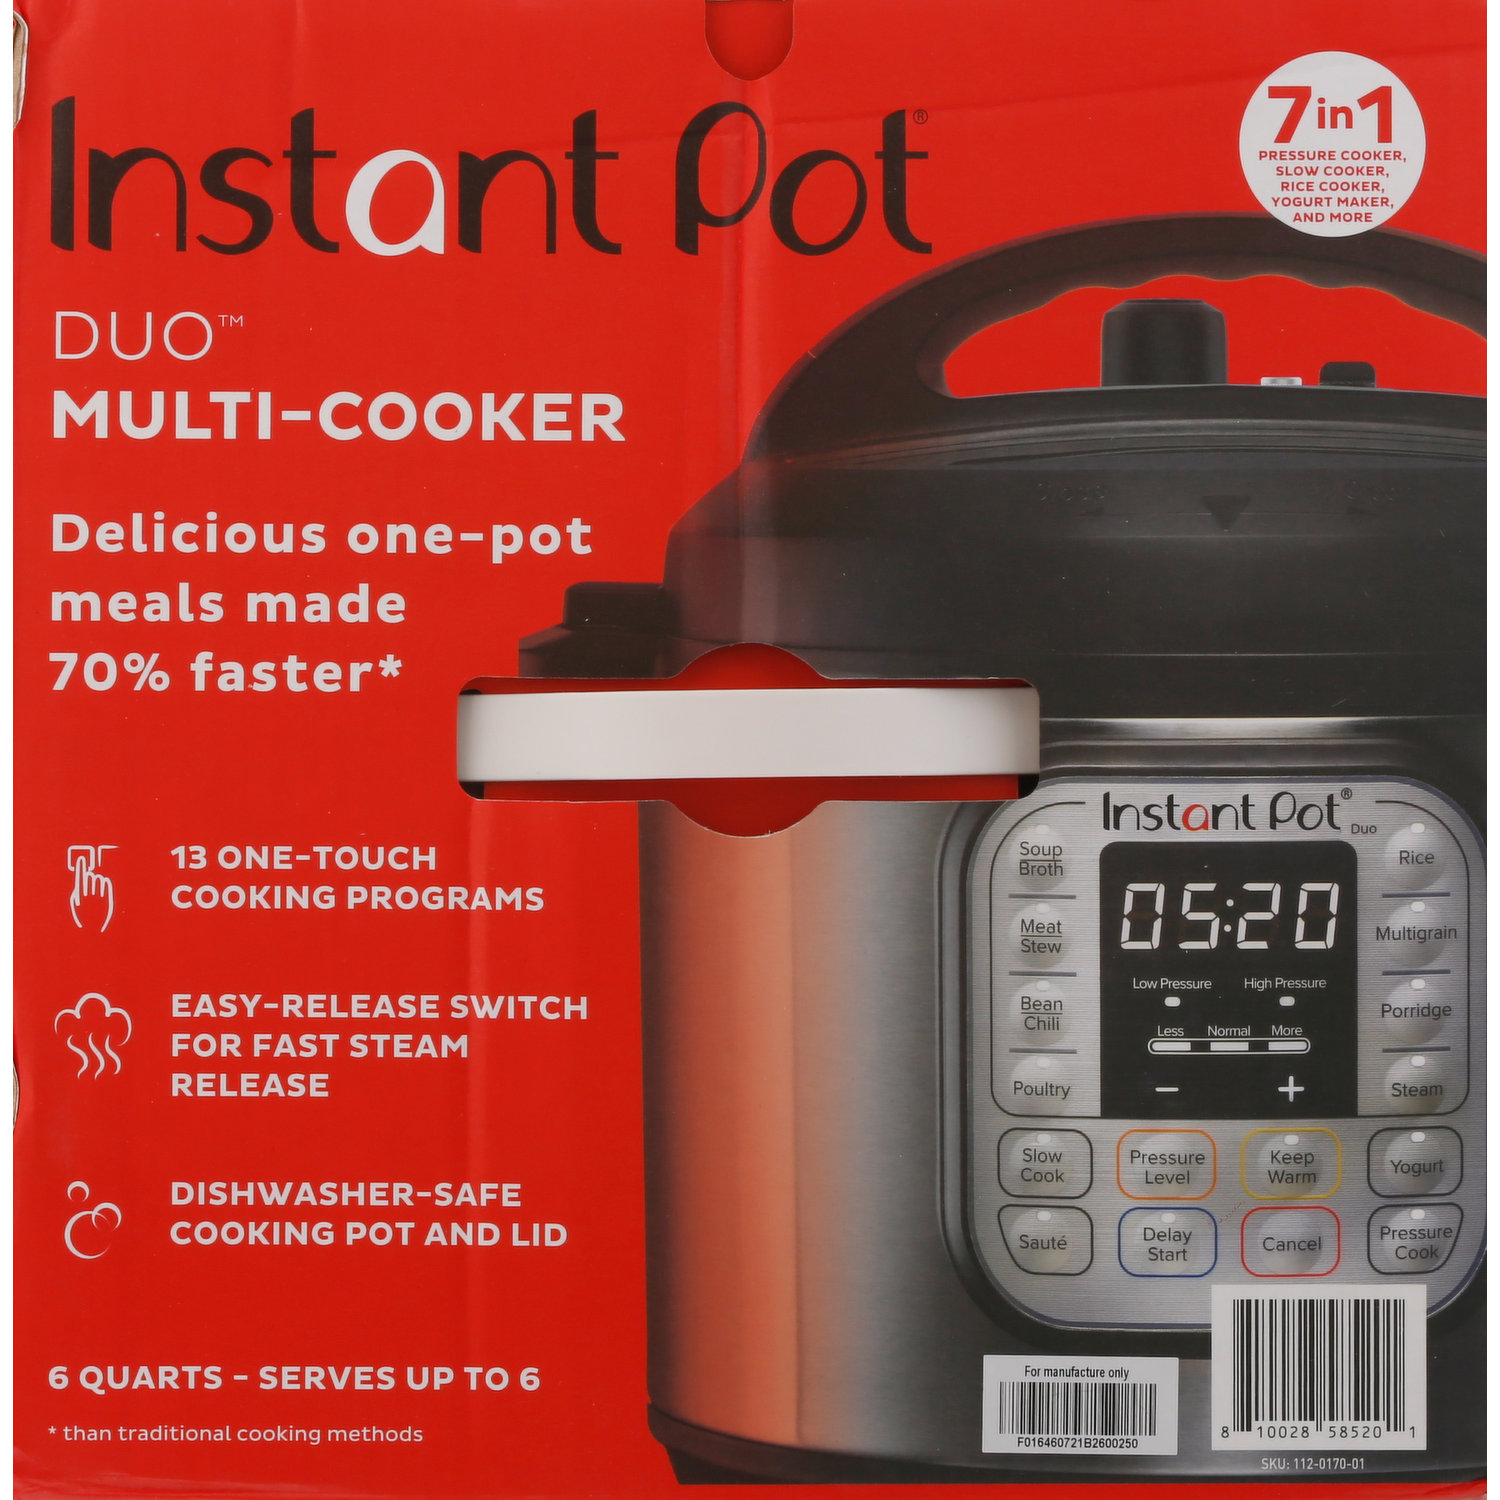 Instant Pot DUO60 7-in-1 6 Quart Multi-Cooker Review - Consumer